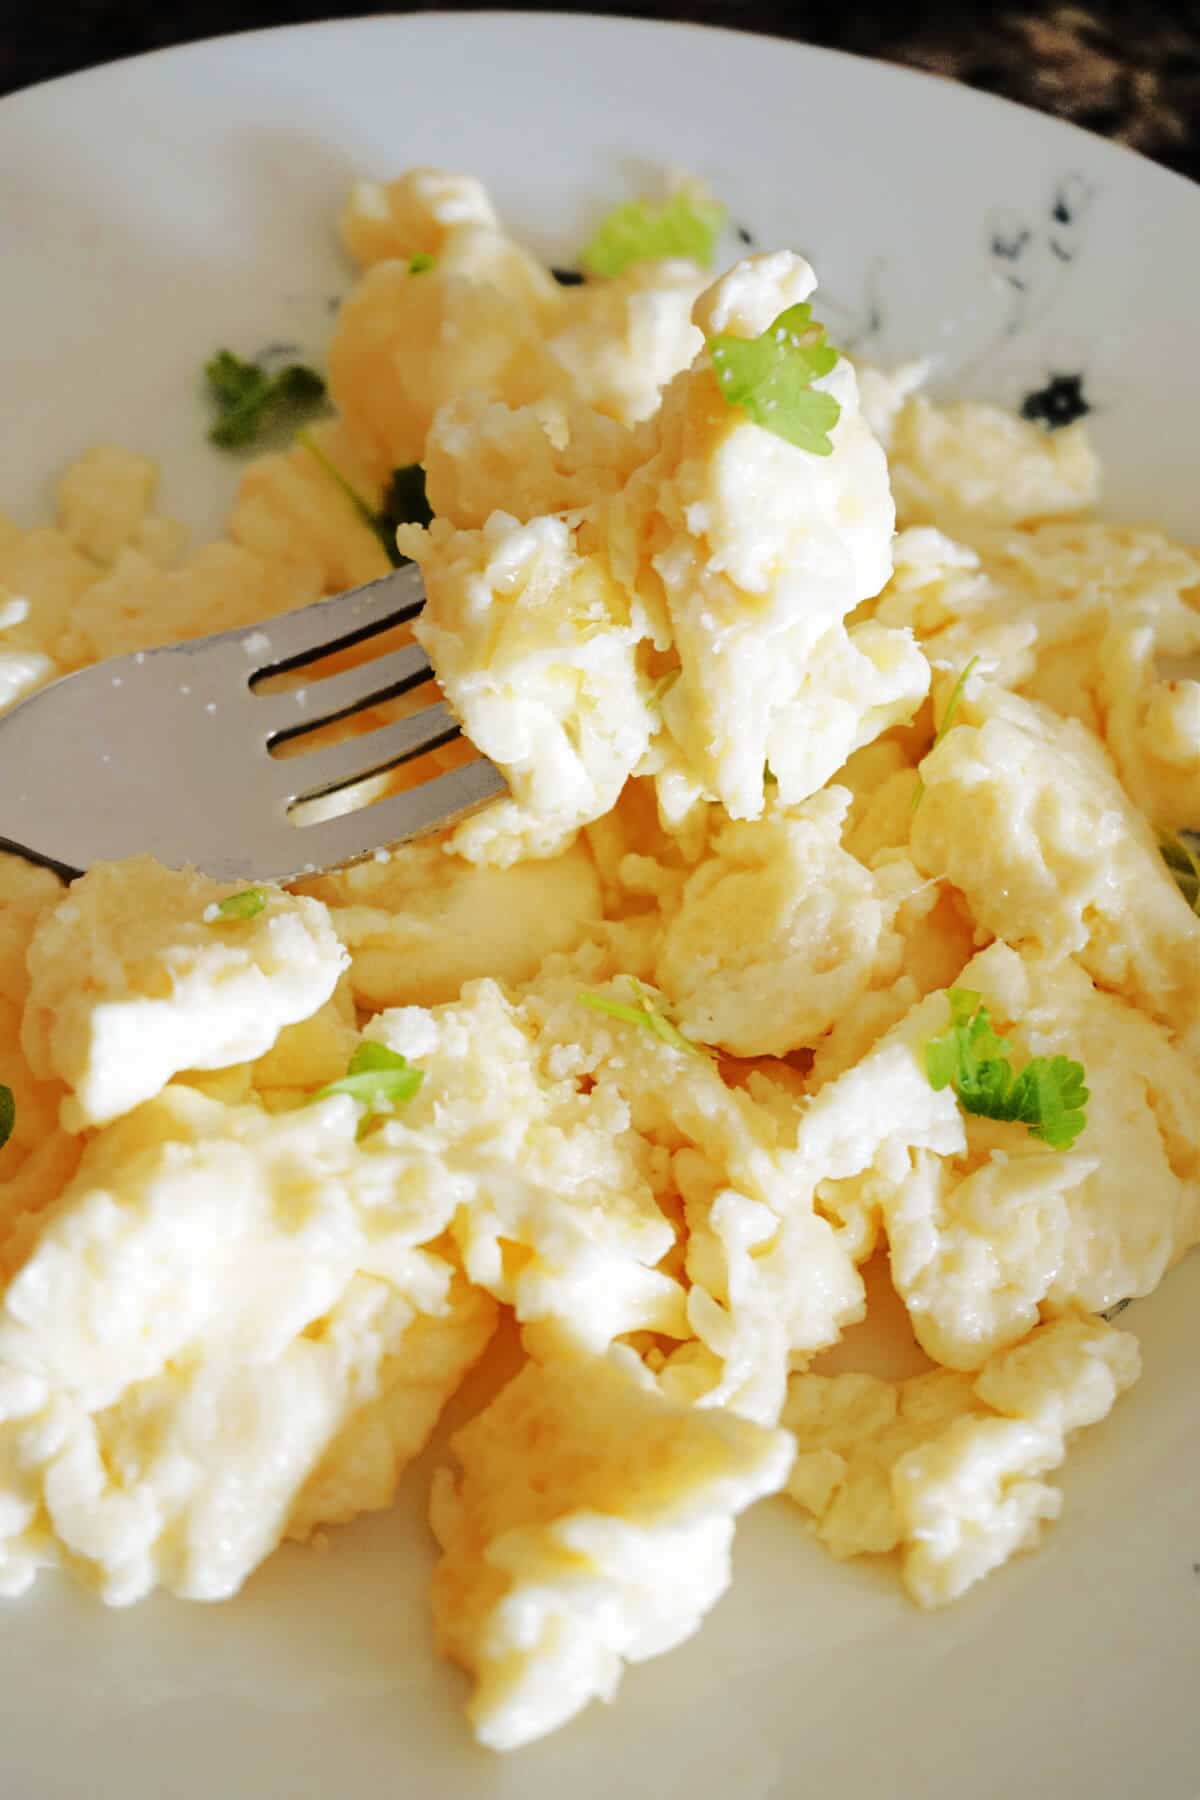 Close-up shot of scrambled eggs and a fork.